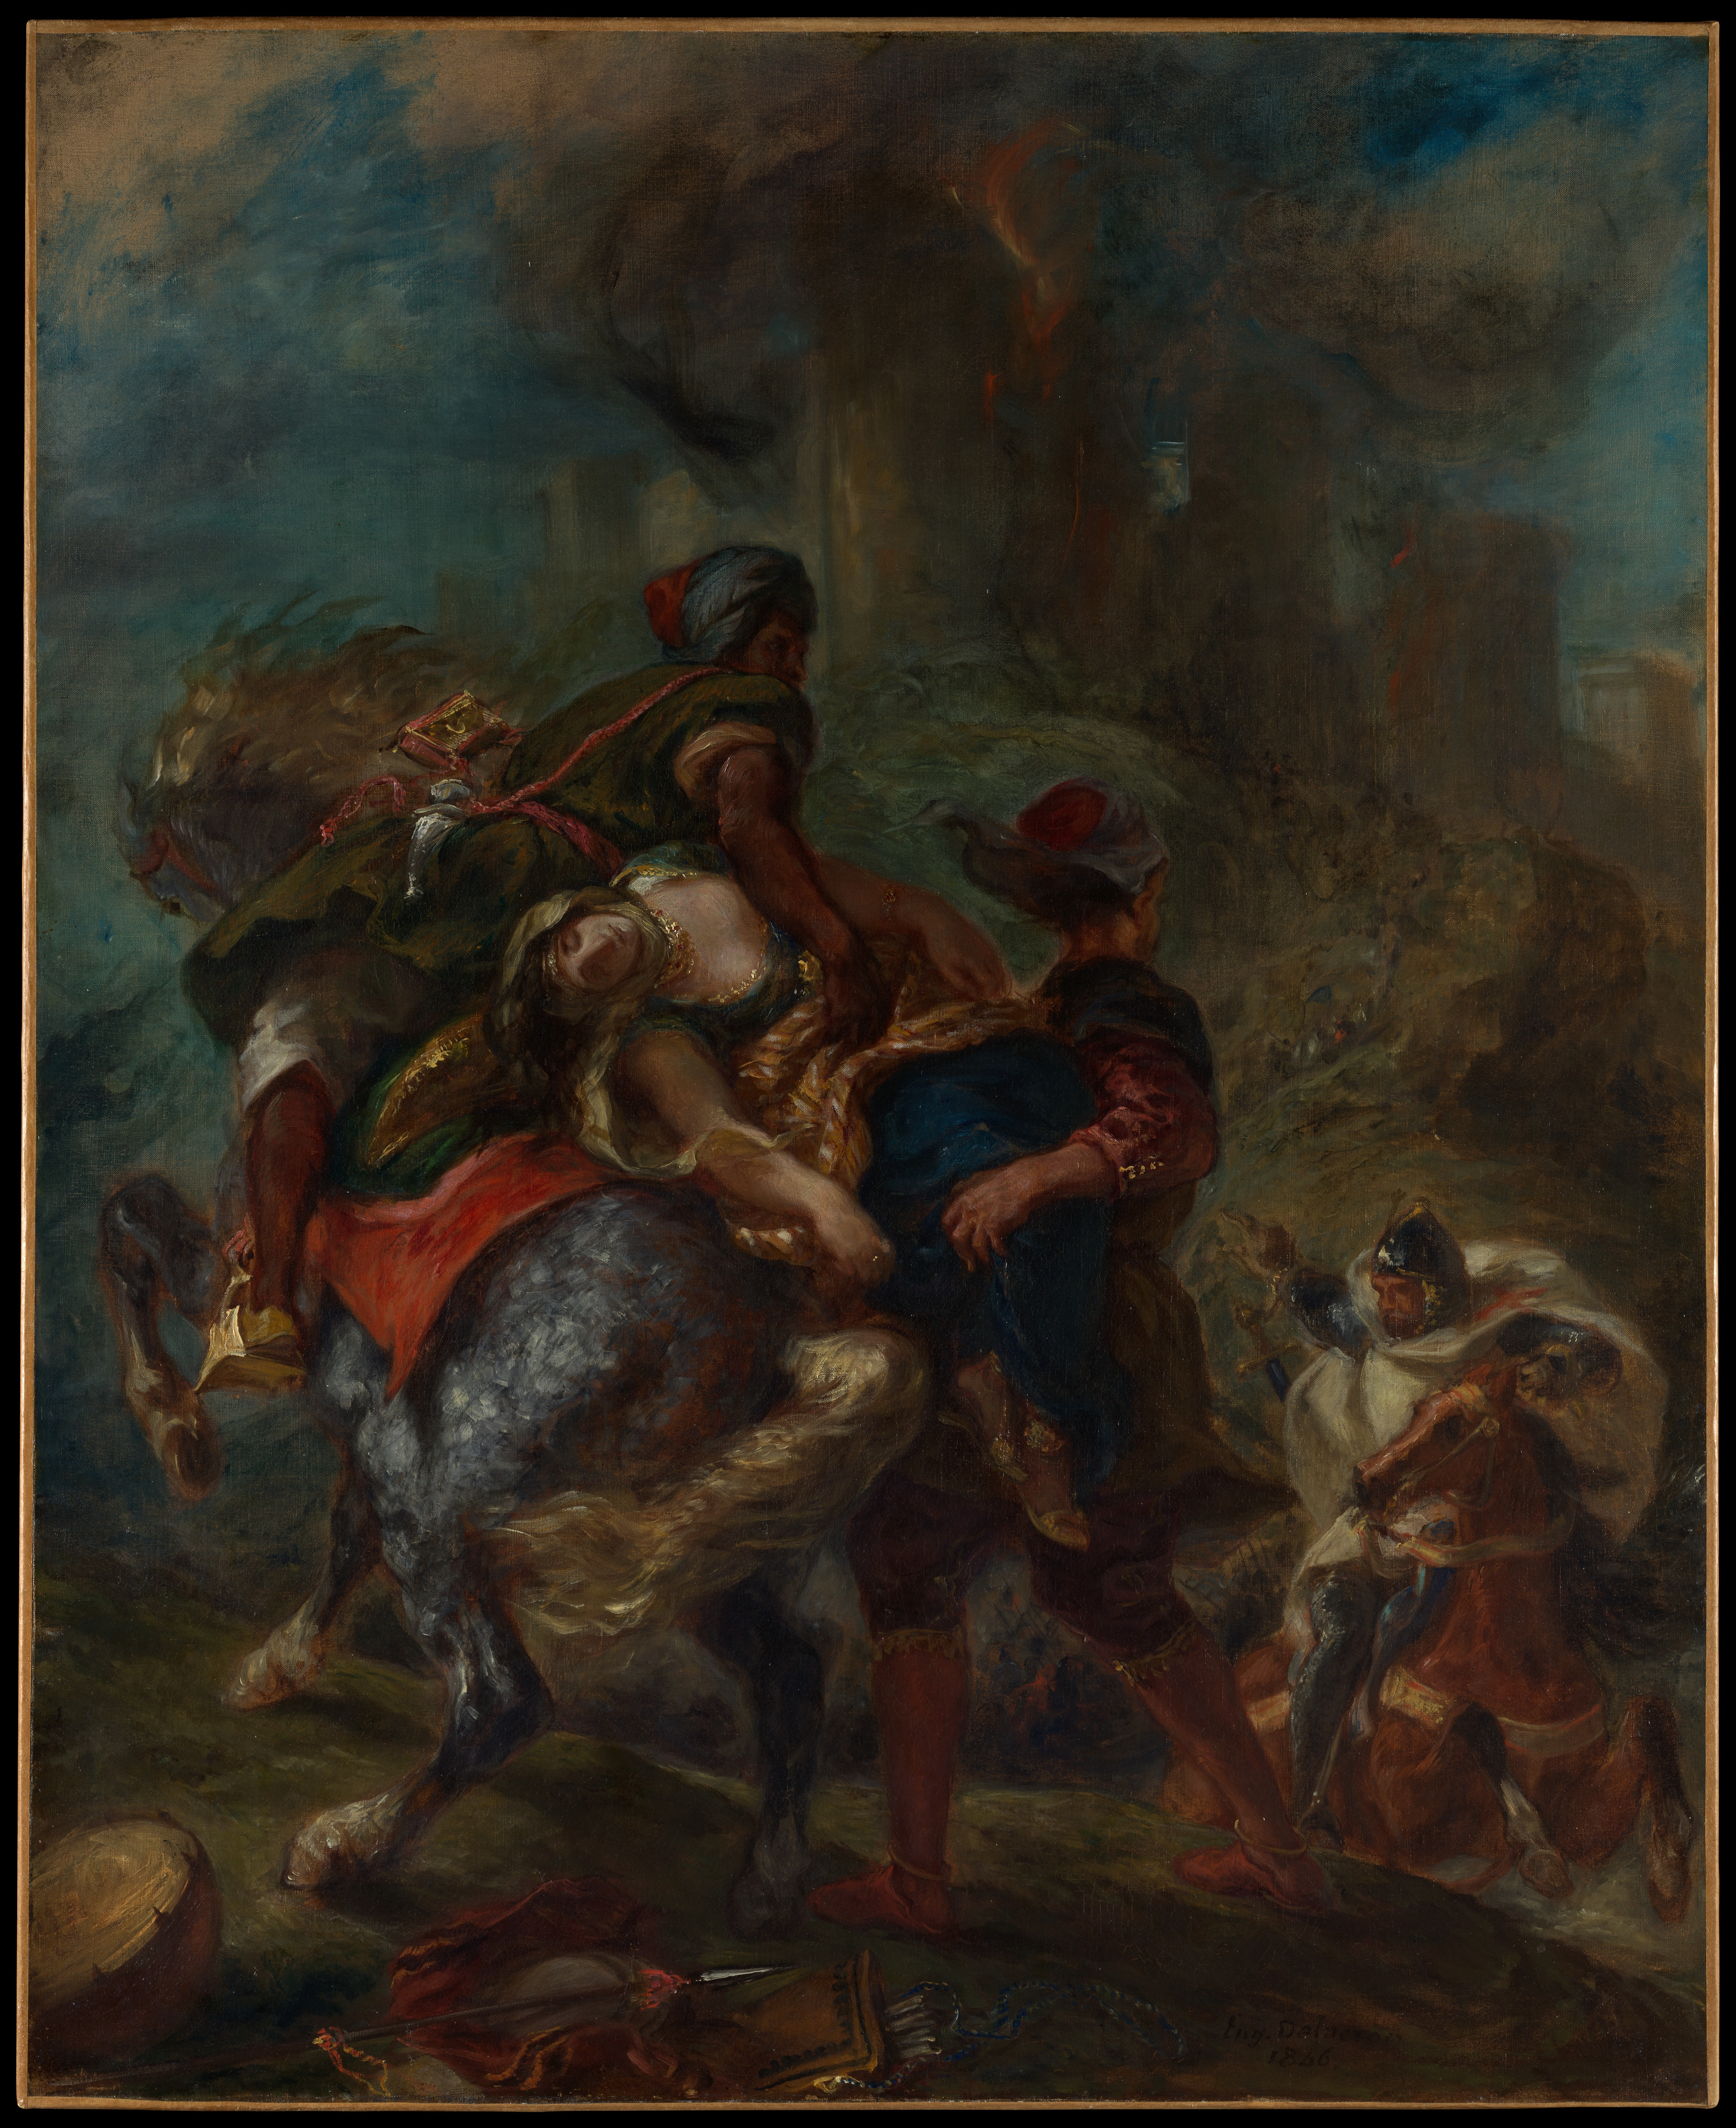 Únos Rebeky by Eugène Delacroix - 1846 - 100,3 cm x 81,9 cm 